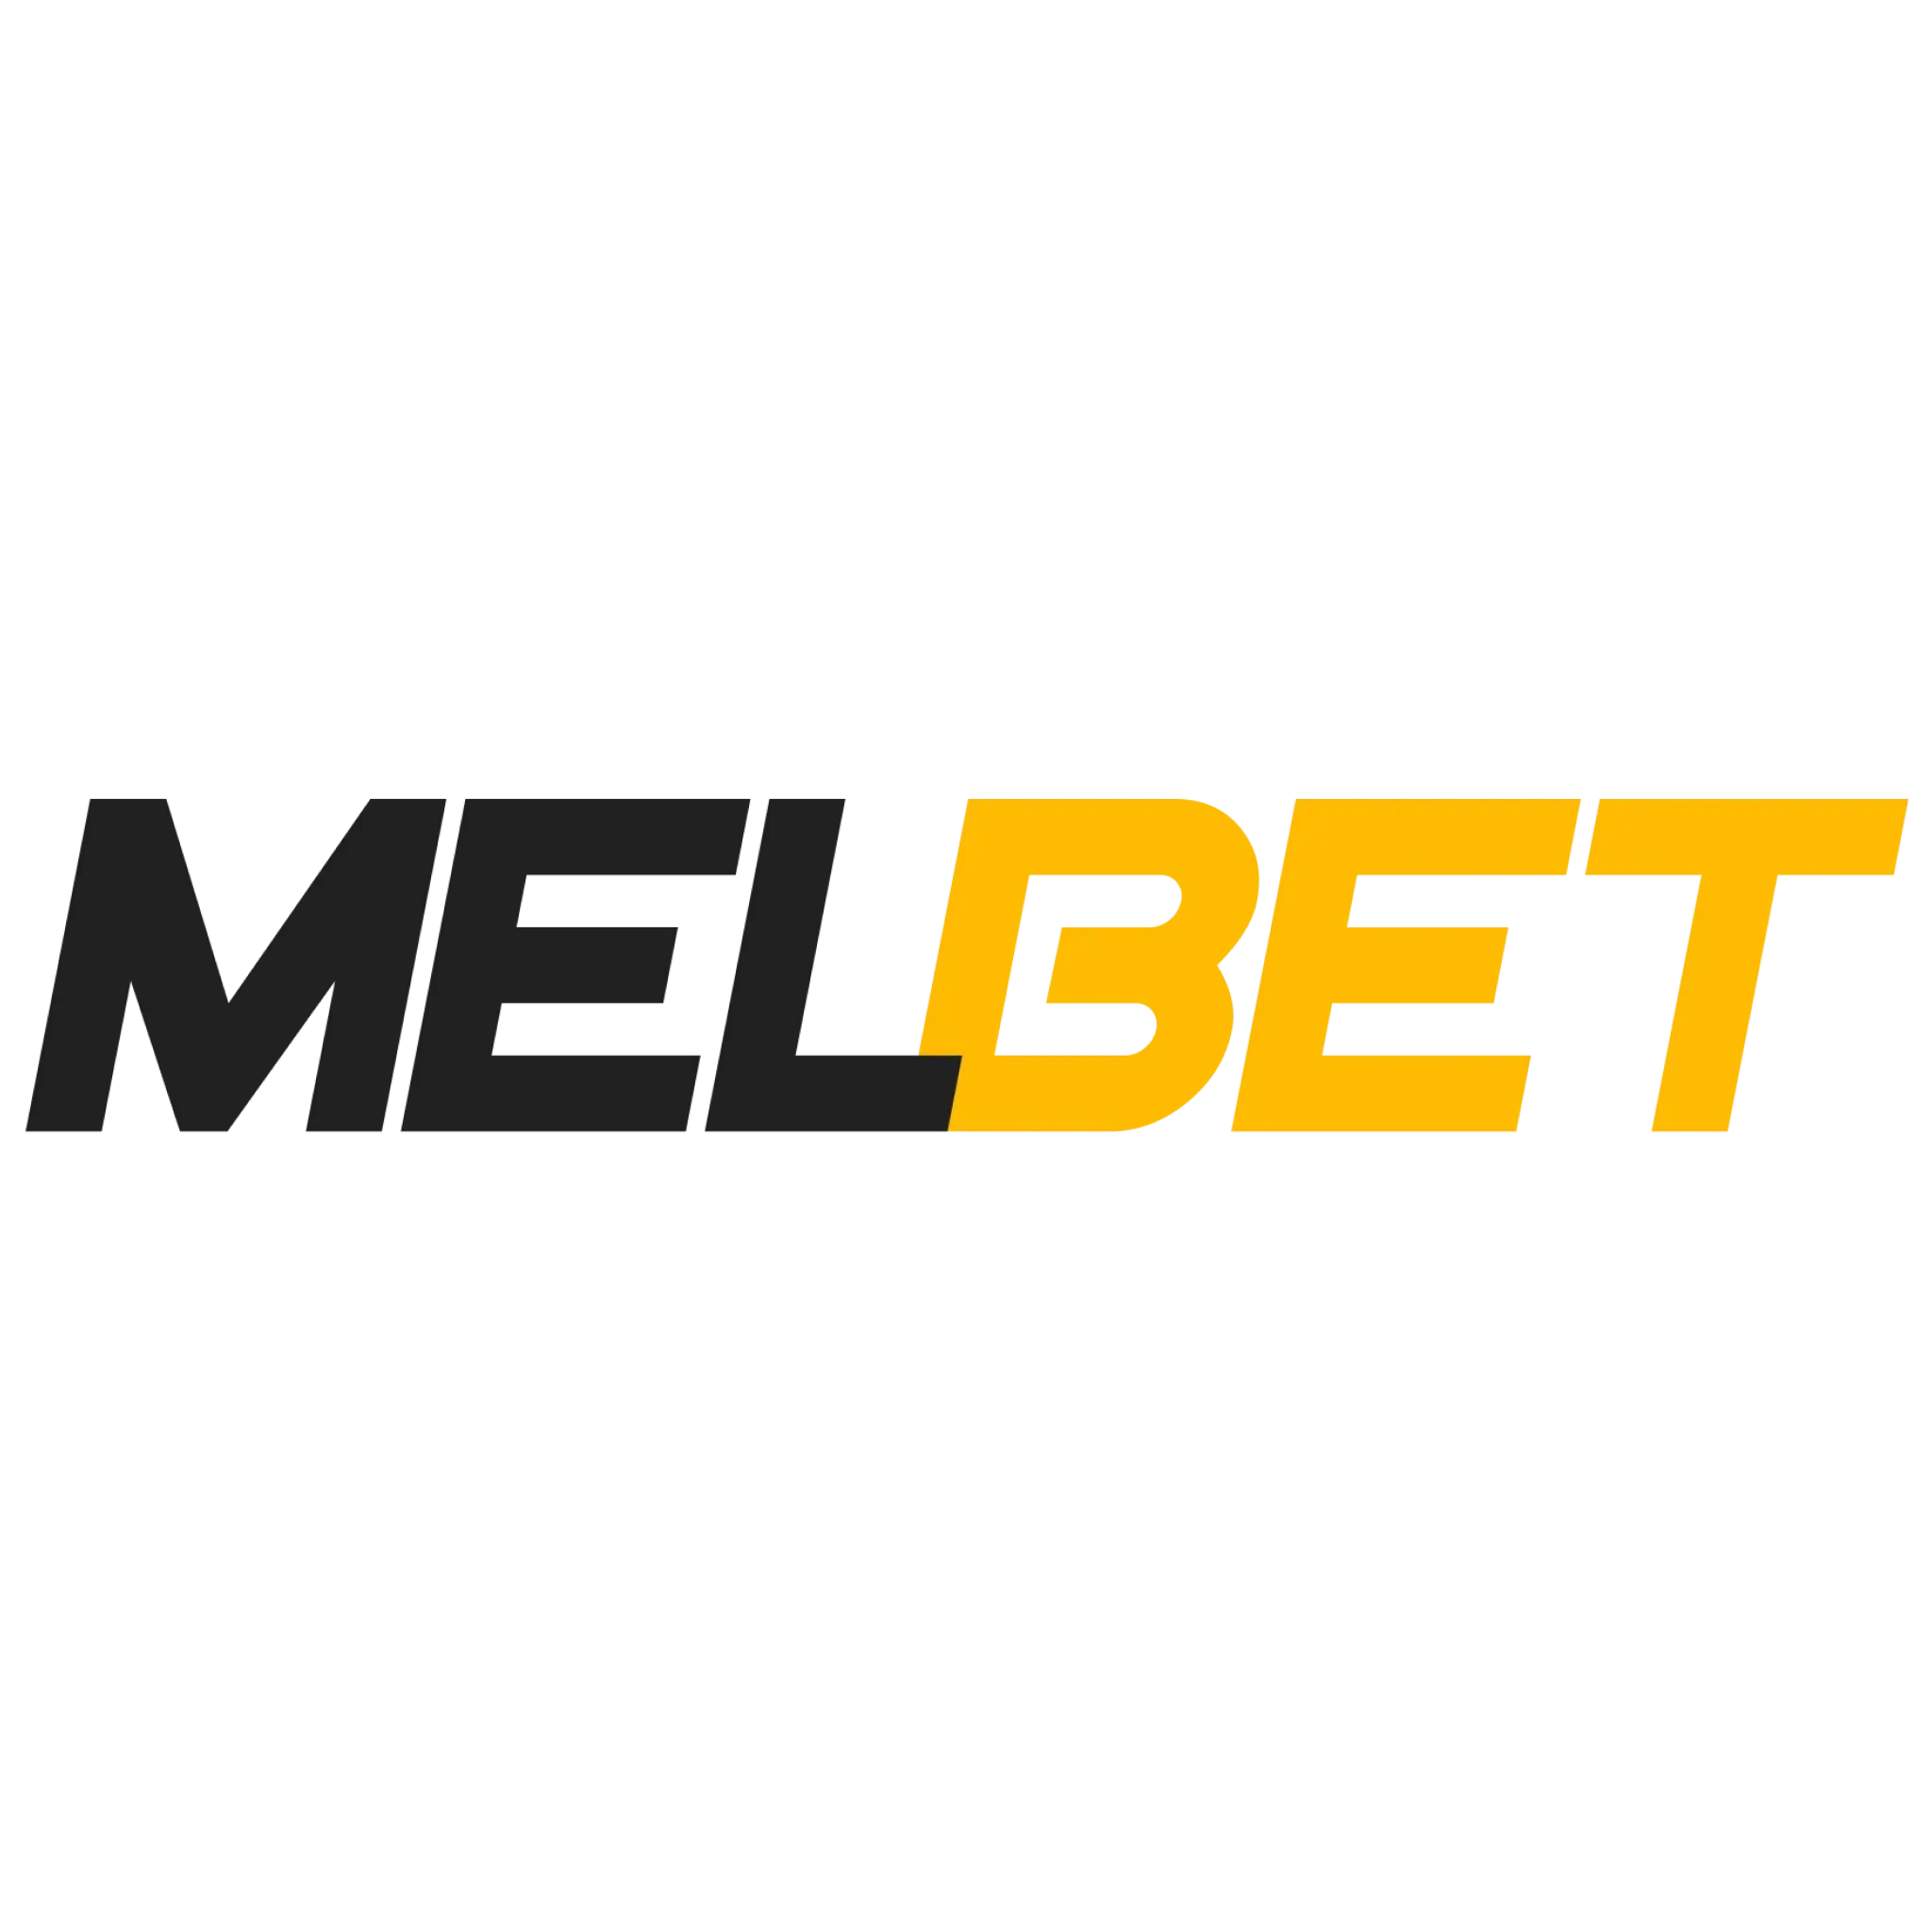 Melbet Horse Racing